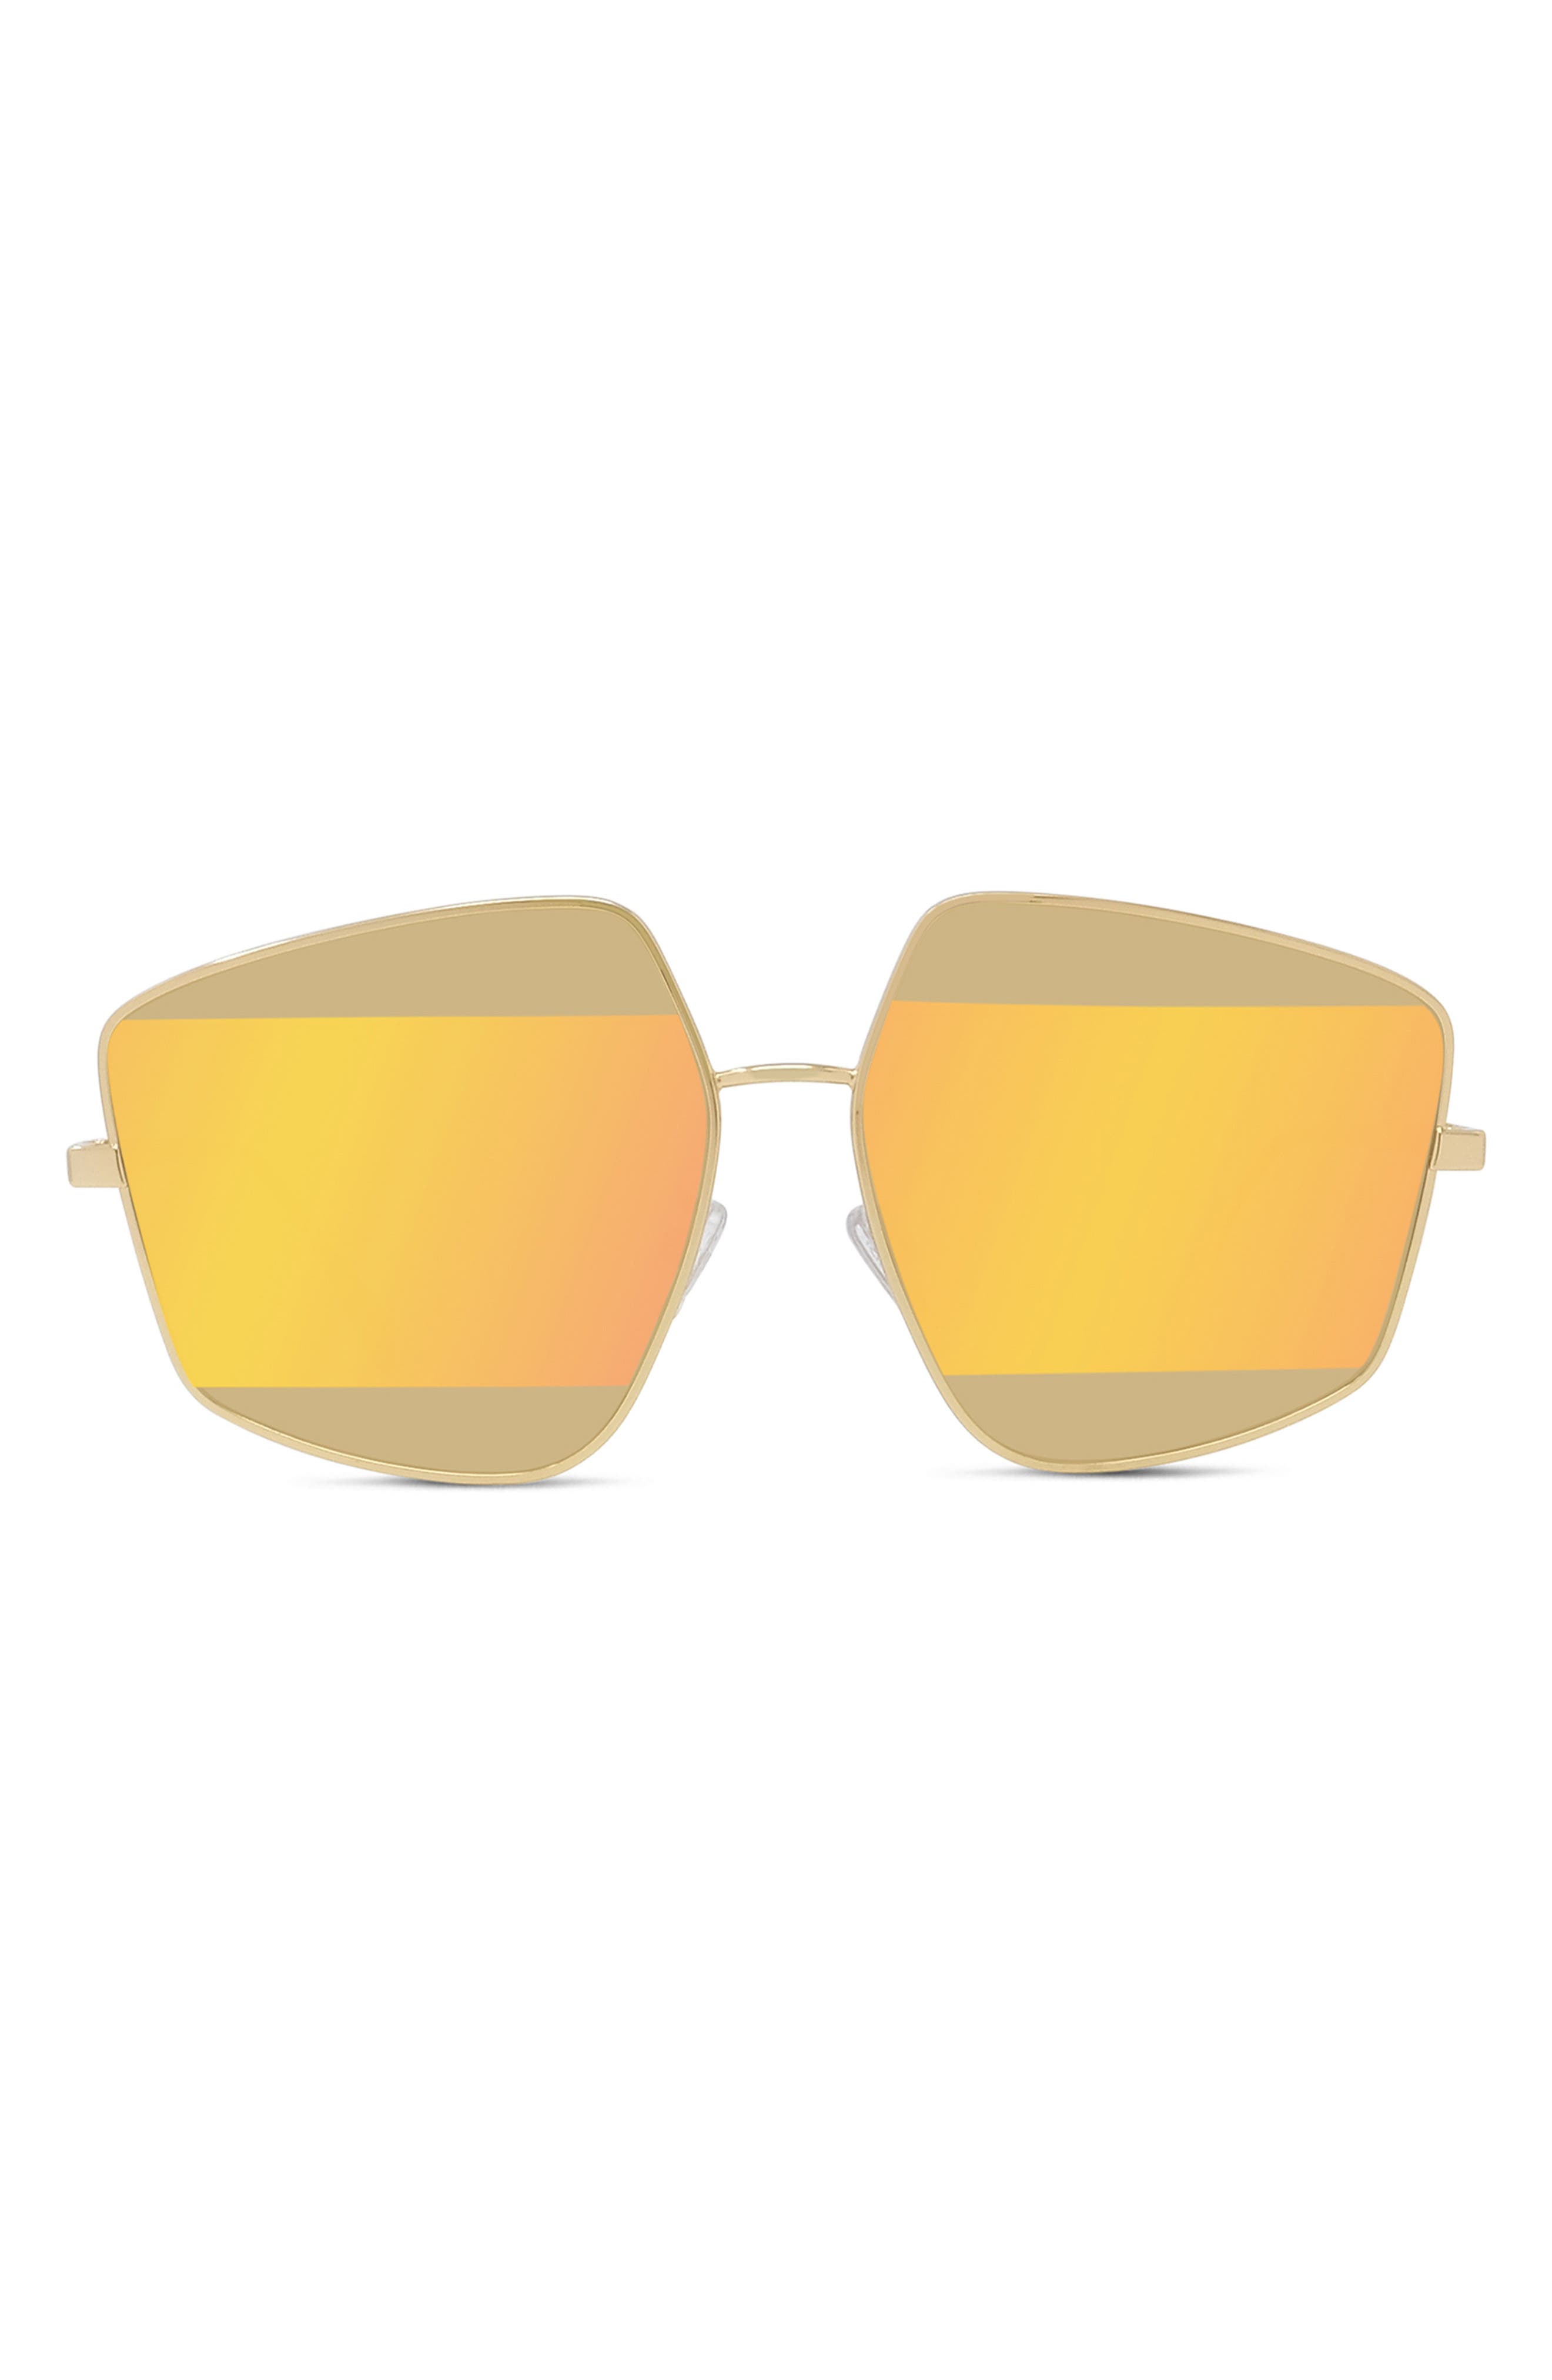 Fendi 60mm Stripe Lens Sunglasses in Endura Gold /Brown Mirror at Nordstrom